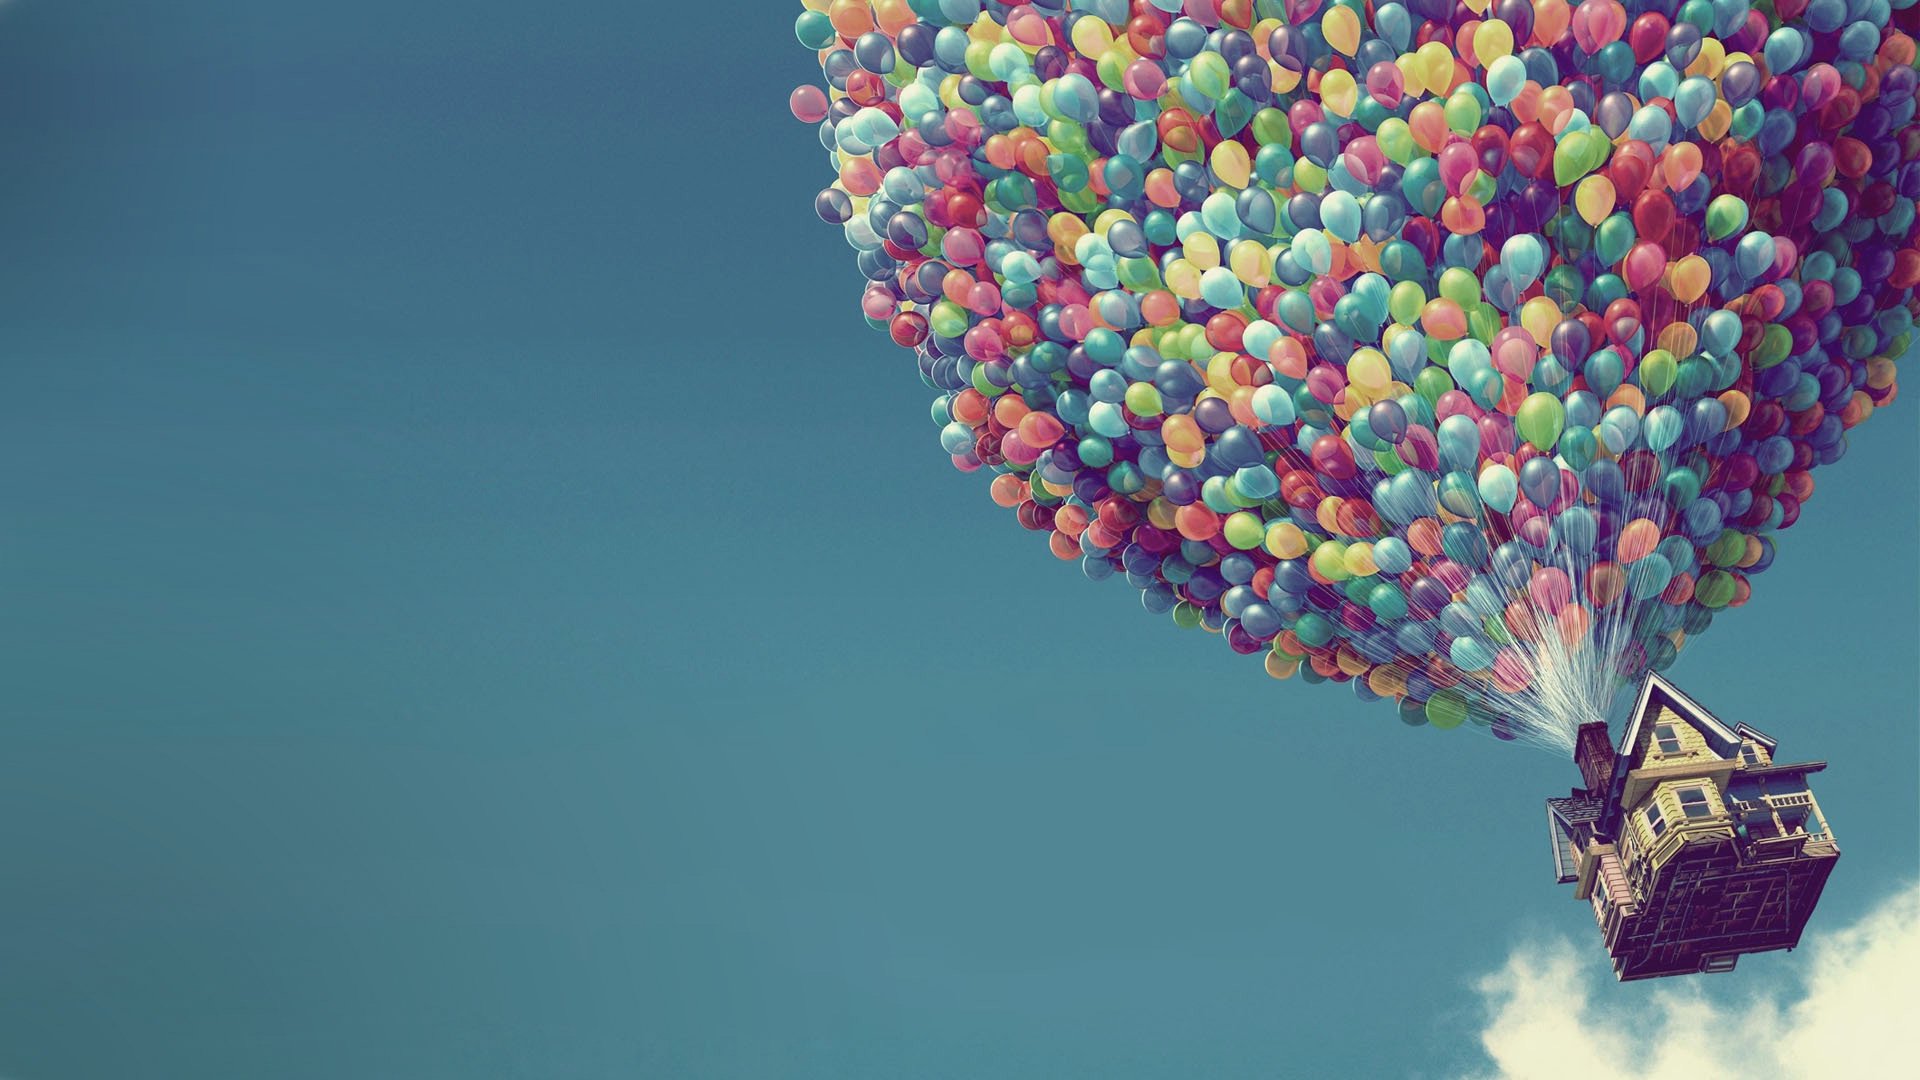 UP Disney Pixar cartoon Full HD Wallpaper Balloons and the House